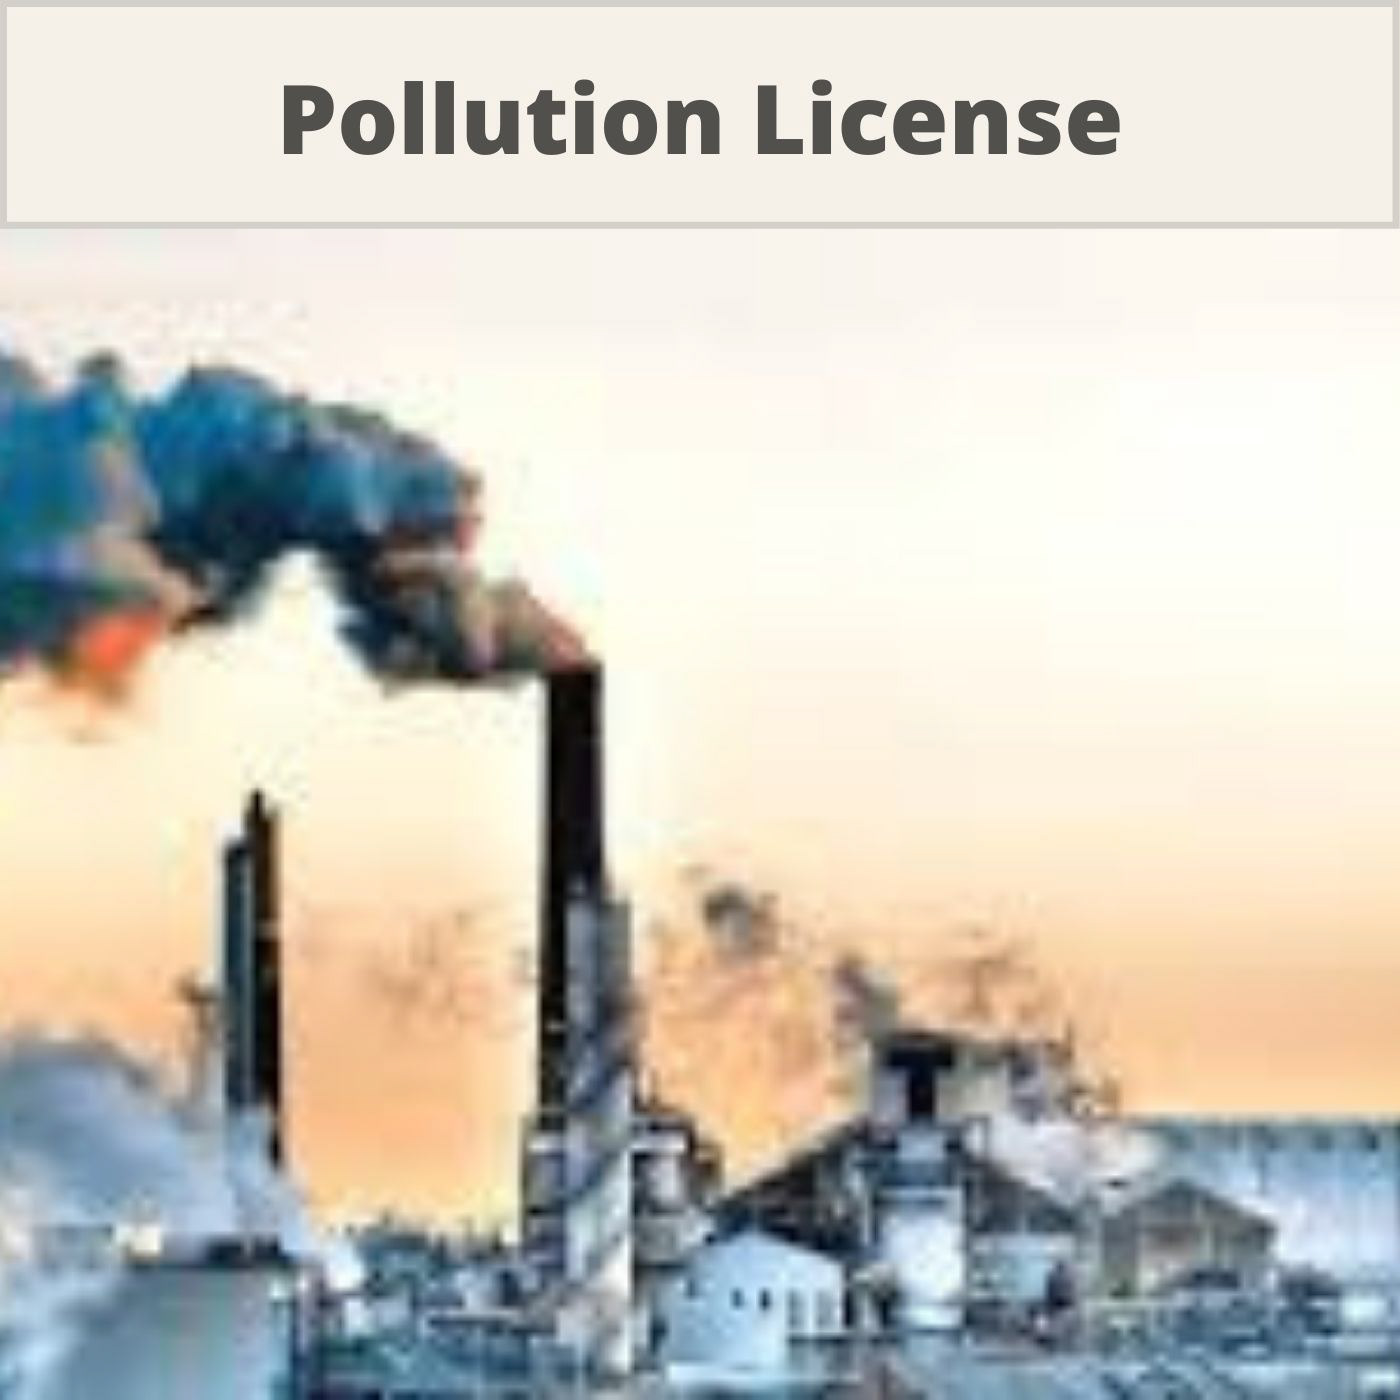 dpcc DPCC Consent DPCC License Pollution License